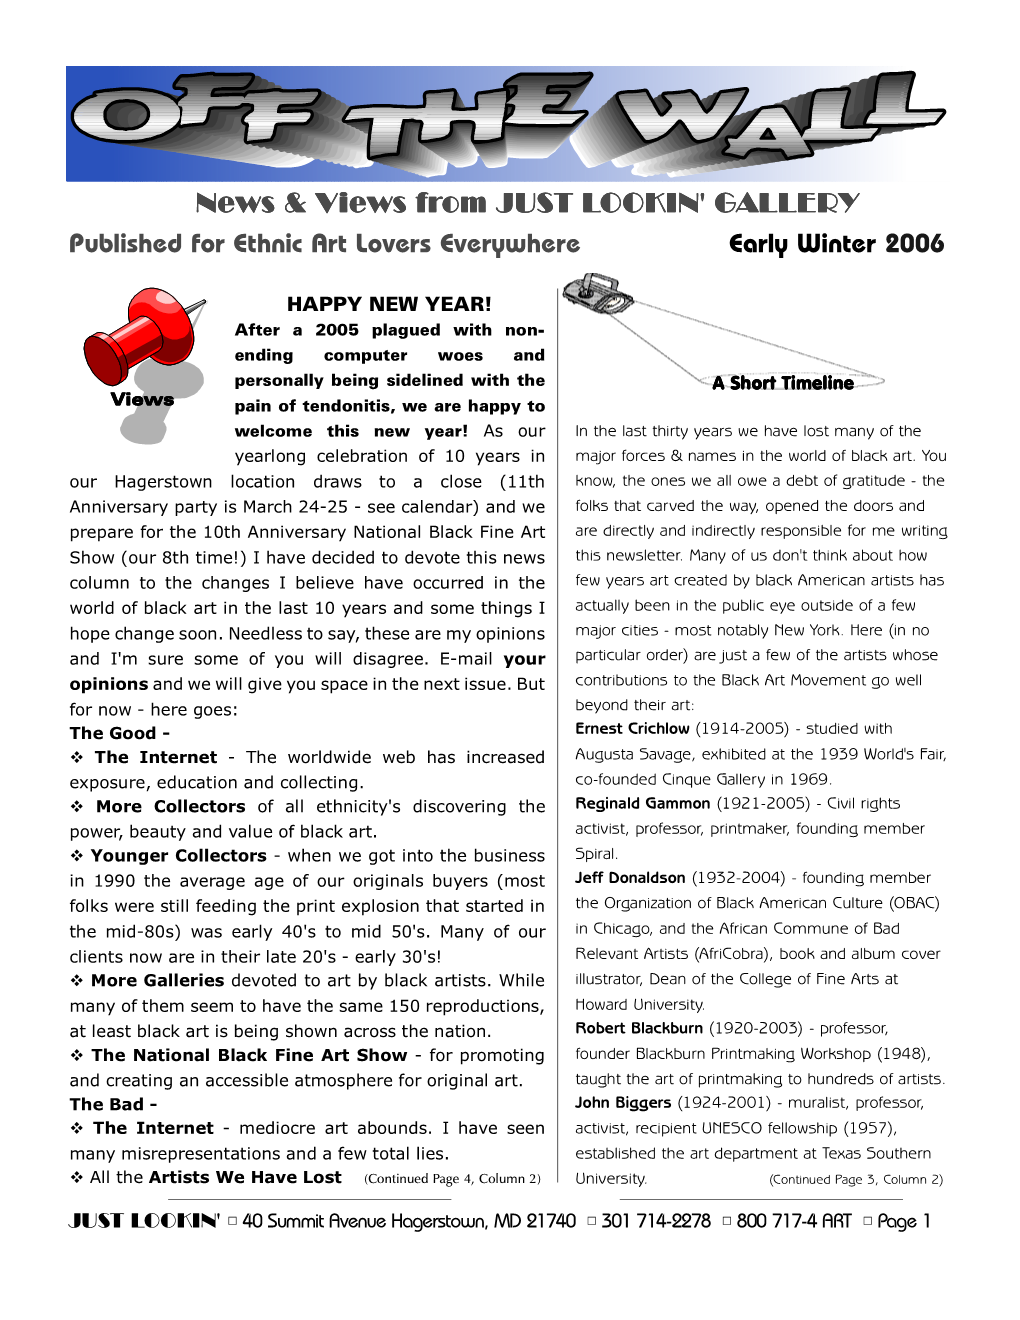 Early Winter 2006 Newsletter